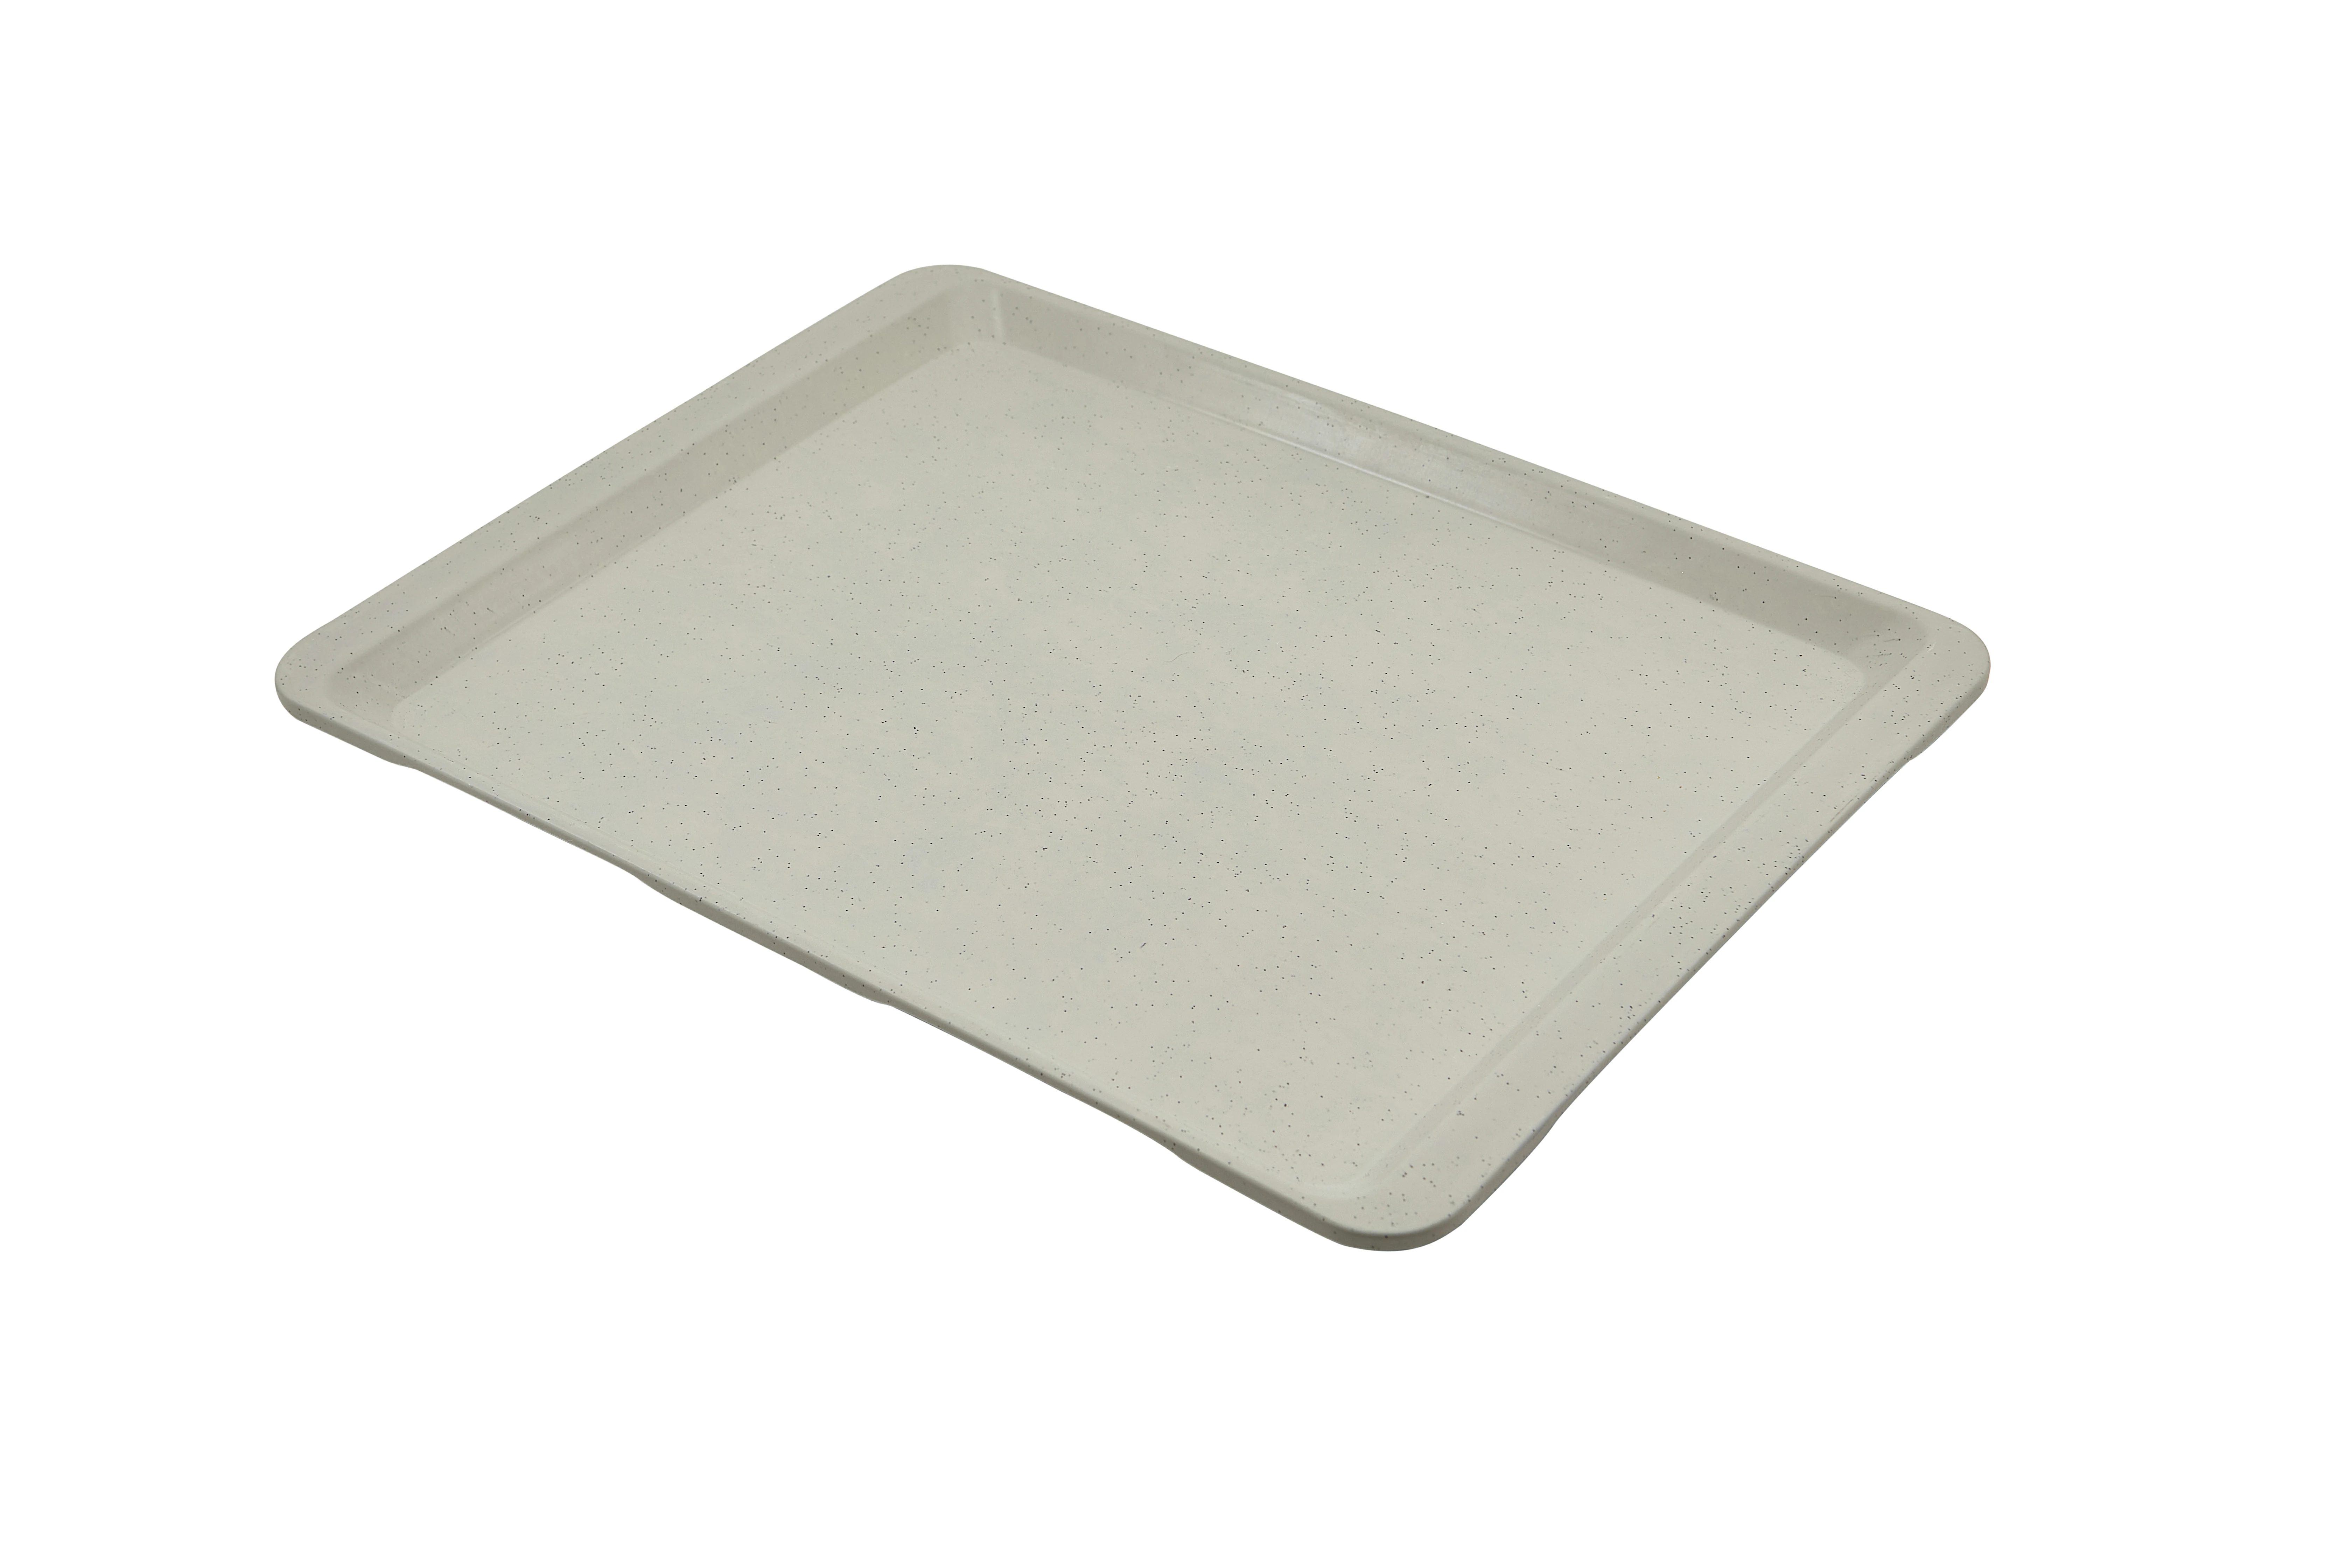 Polyester Tray Light Grey 42.5 x 32.5cm